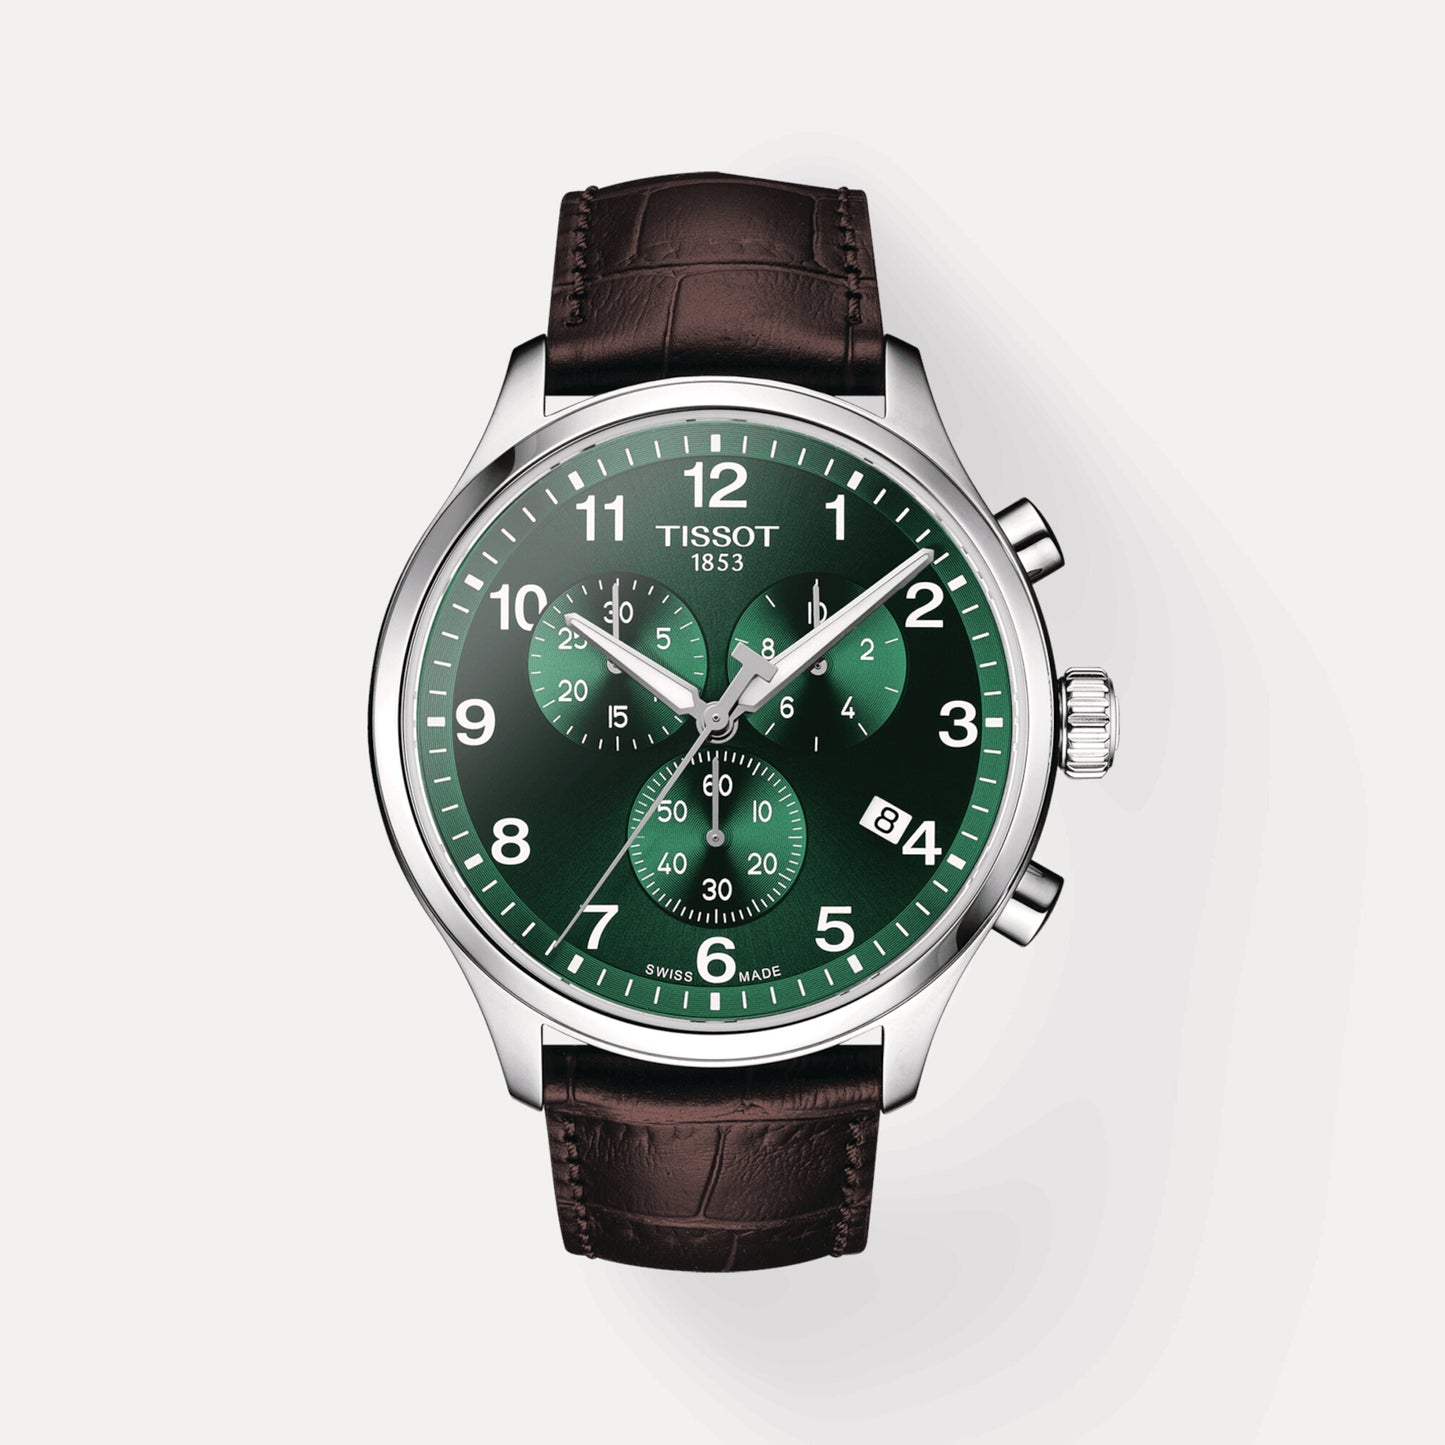 CHRONO XL Men's Chronograph Leather Watch T1166171609200